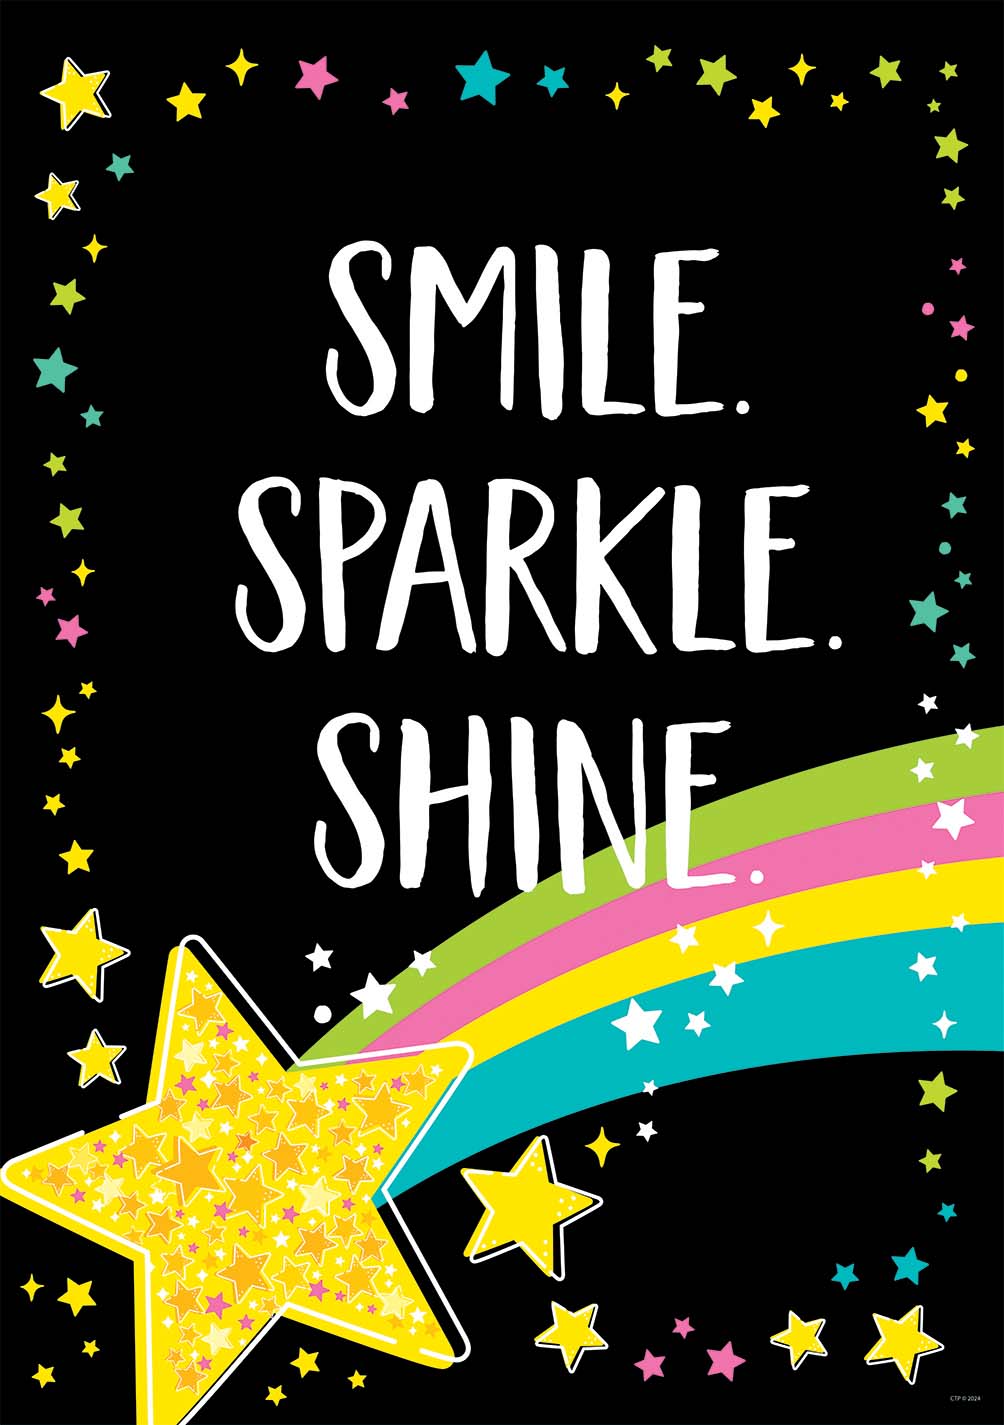 CTP Star Bright Smile. Sparkle, Shine, Inspire U Poster (CTP 10957)